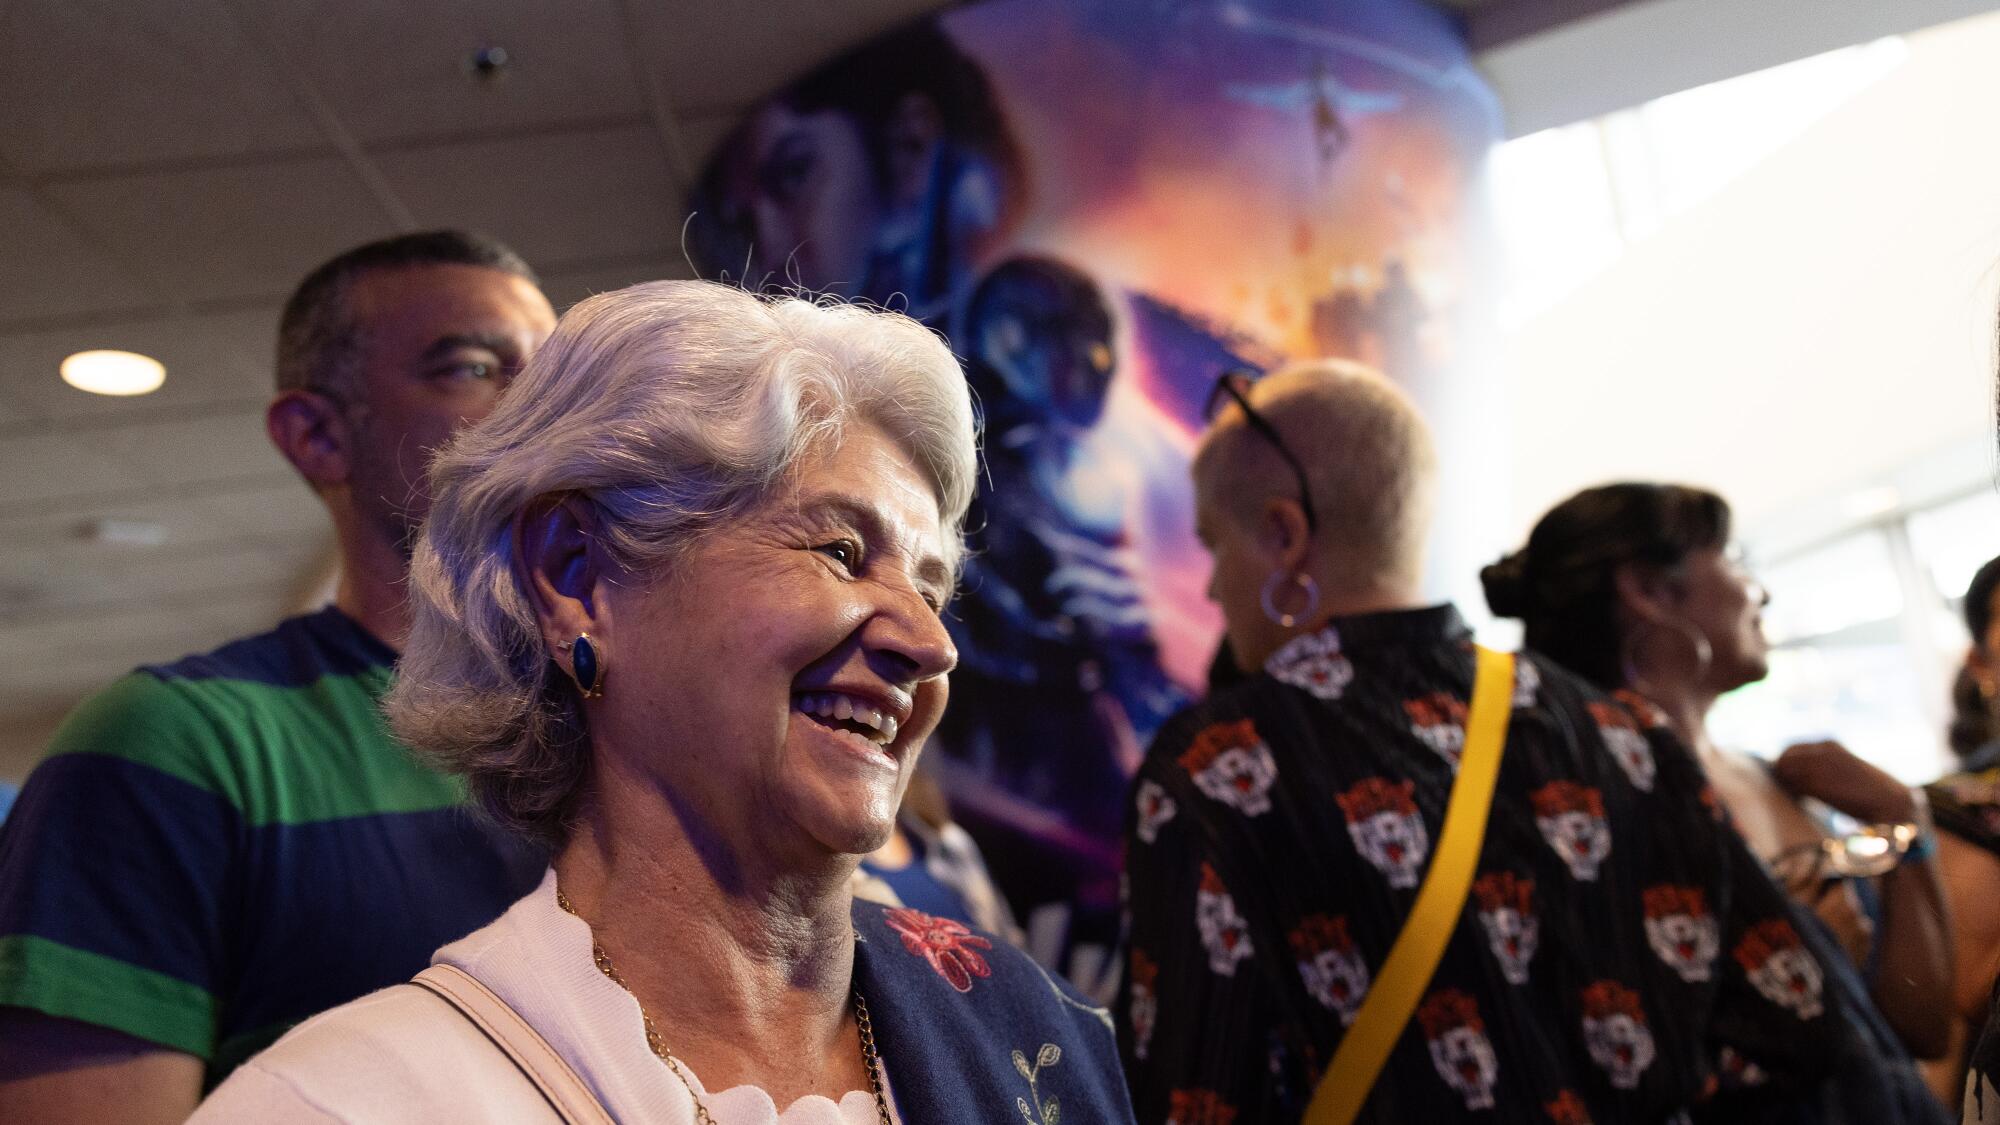 Xolo Maridueña's grandmother smiles at a movie screening.